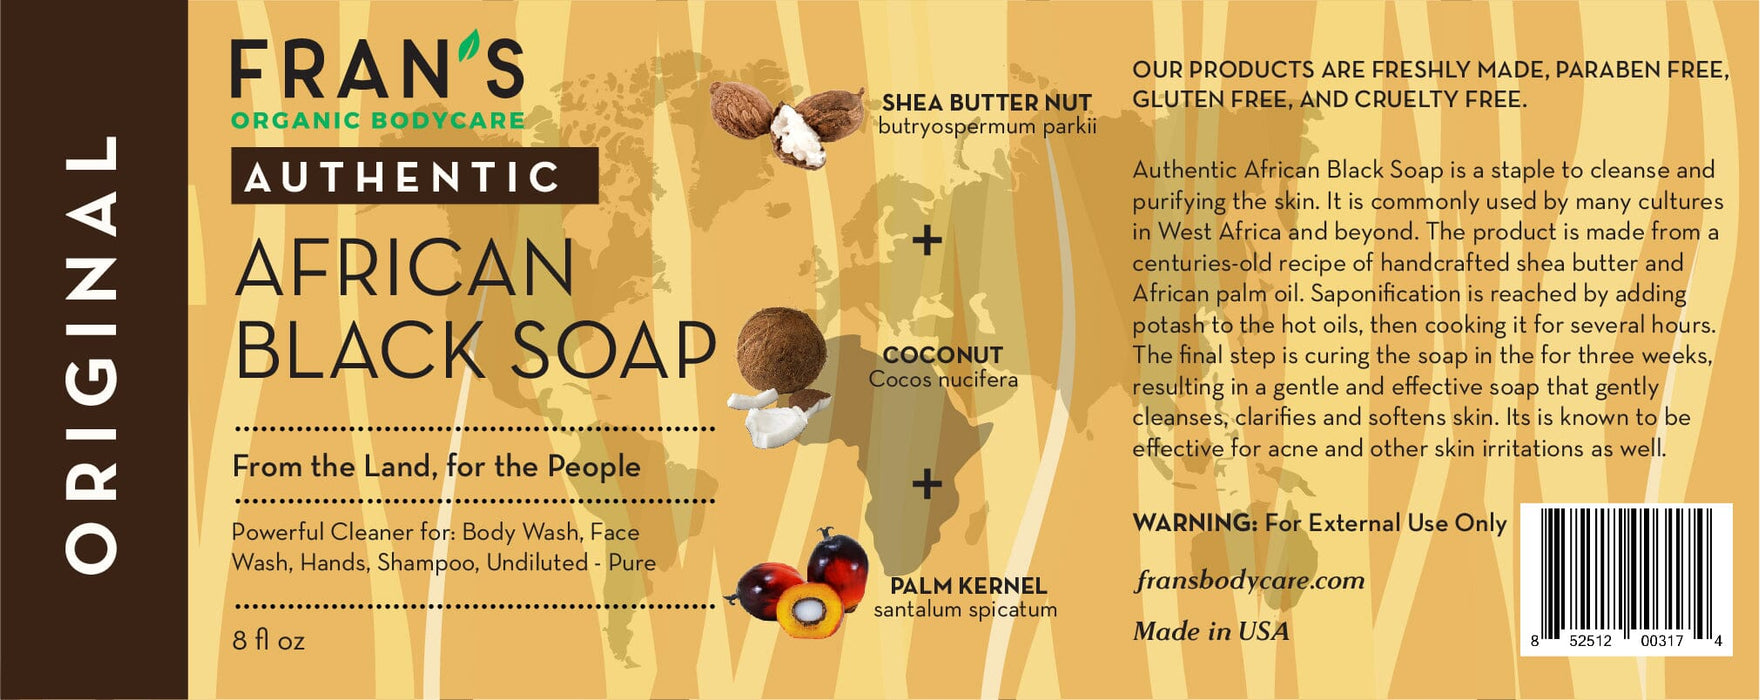 Liquid African Black Soap